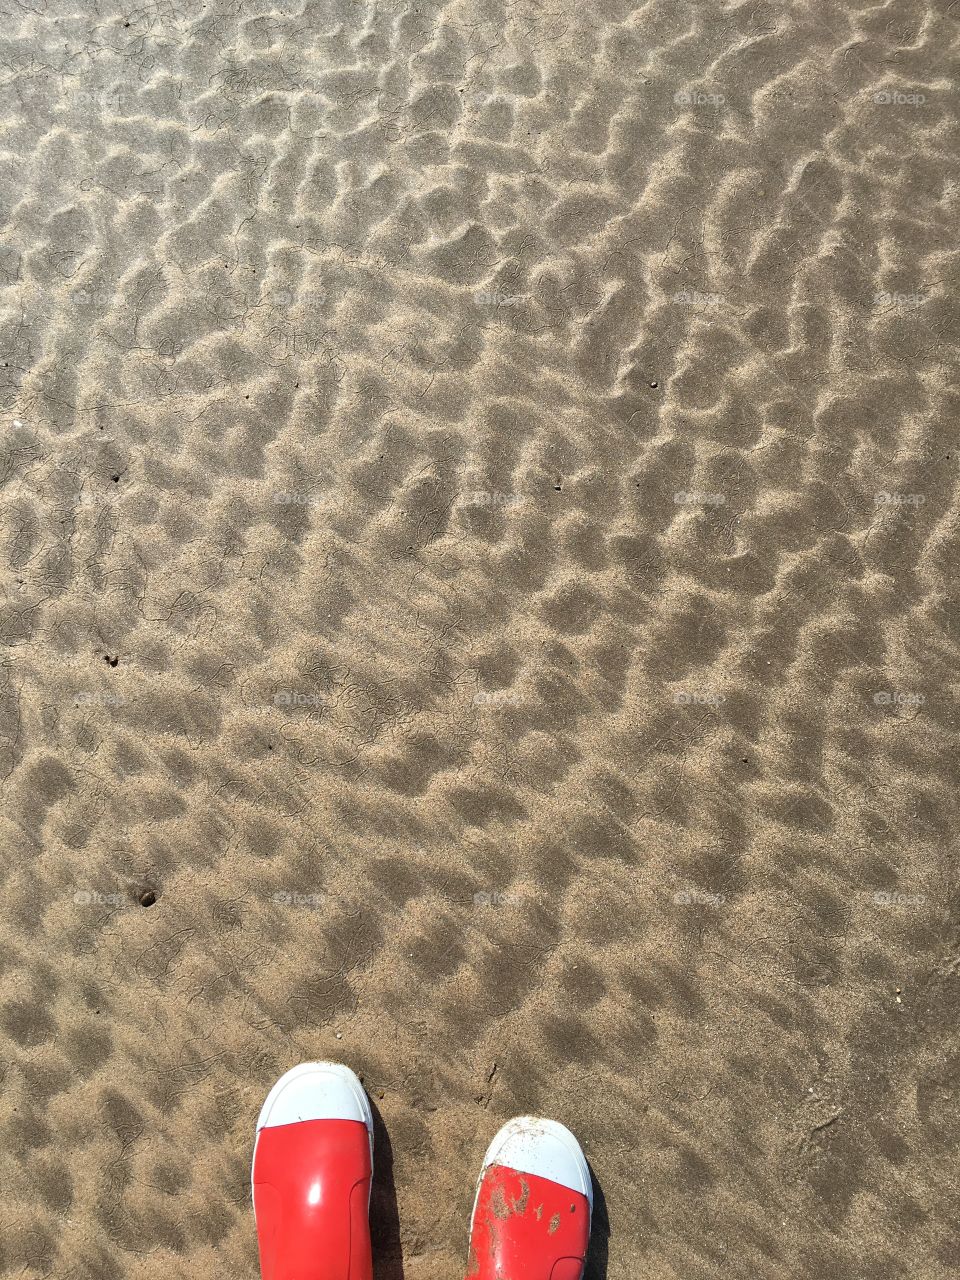 Sand patterns at my feet. 